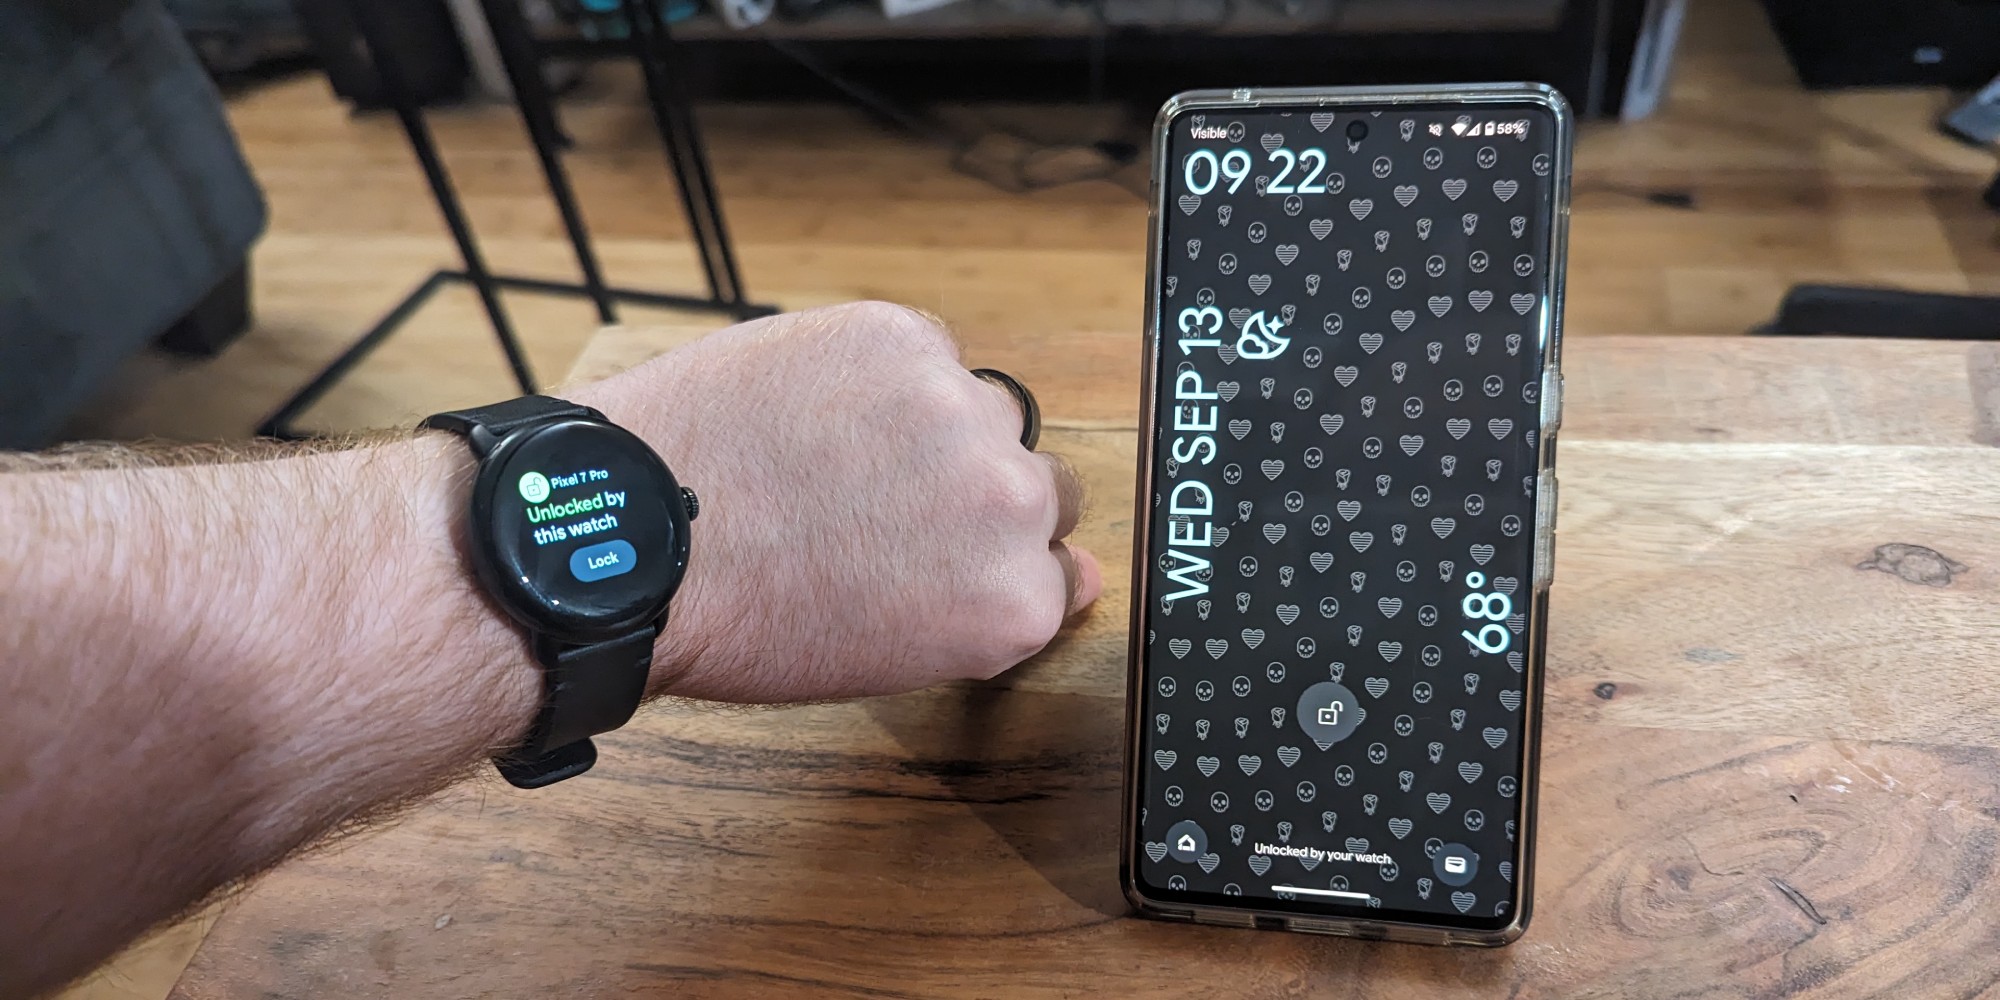 Hands-on: 'Watch Unlock' on Pixel Watch is shockingly quick